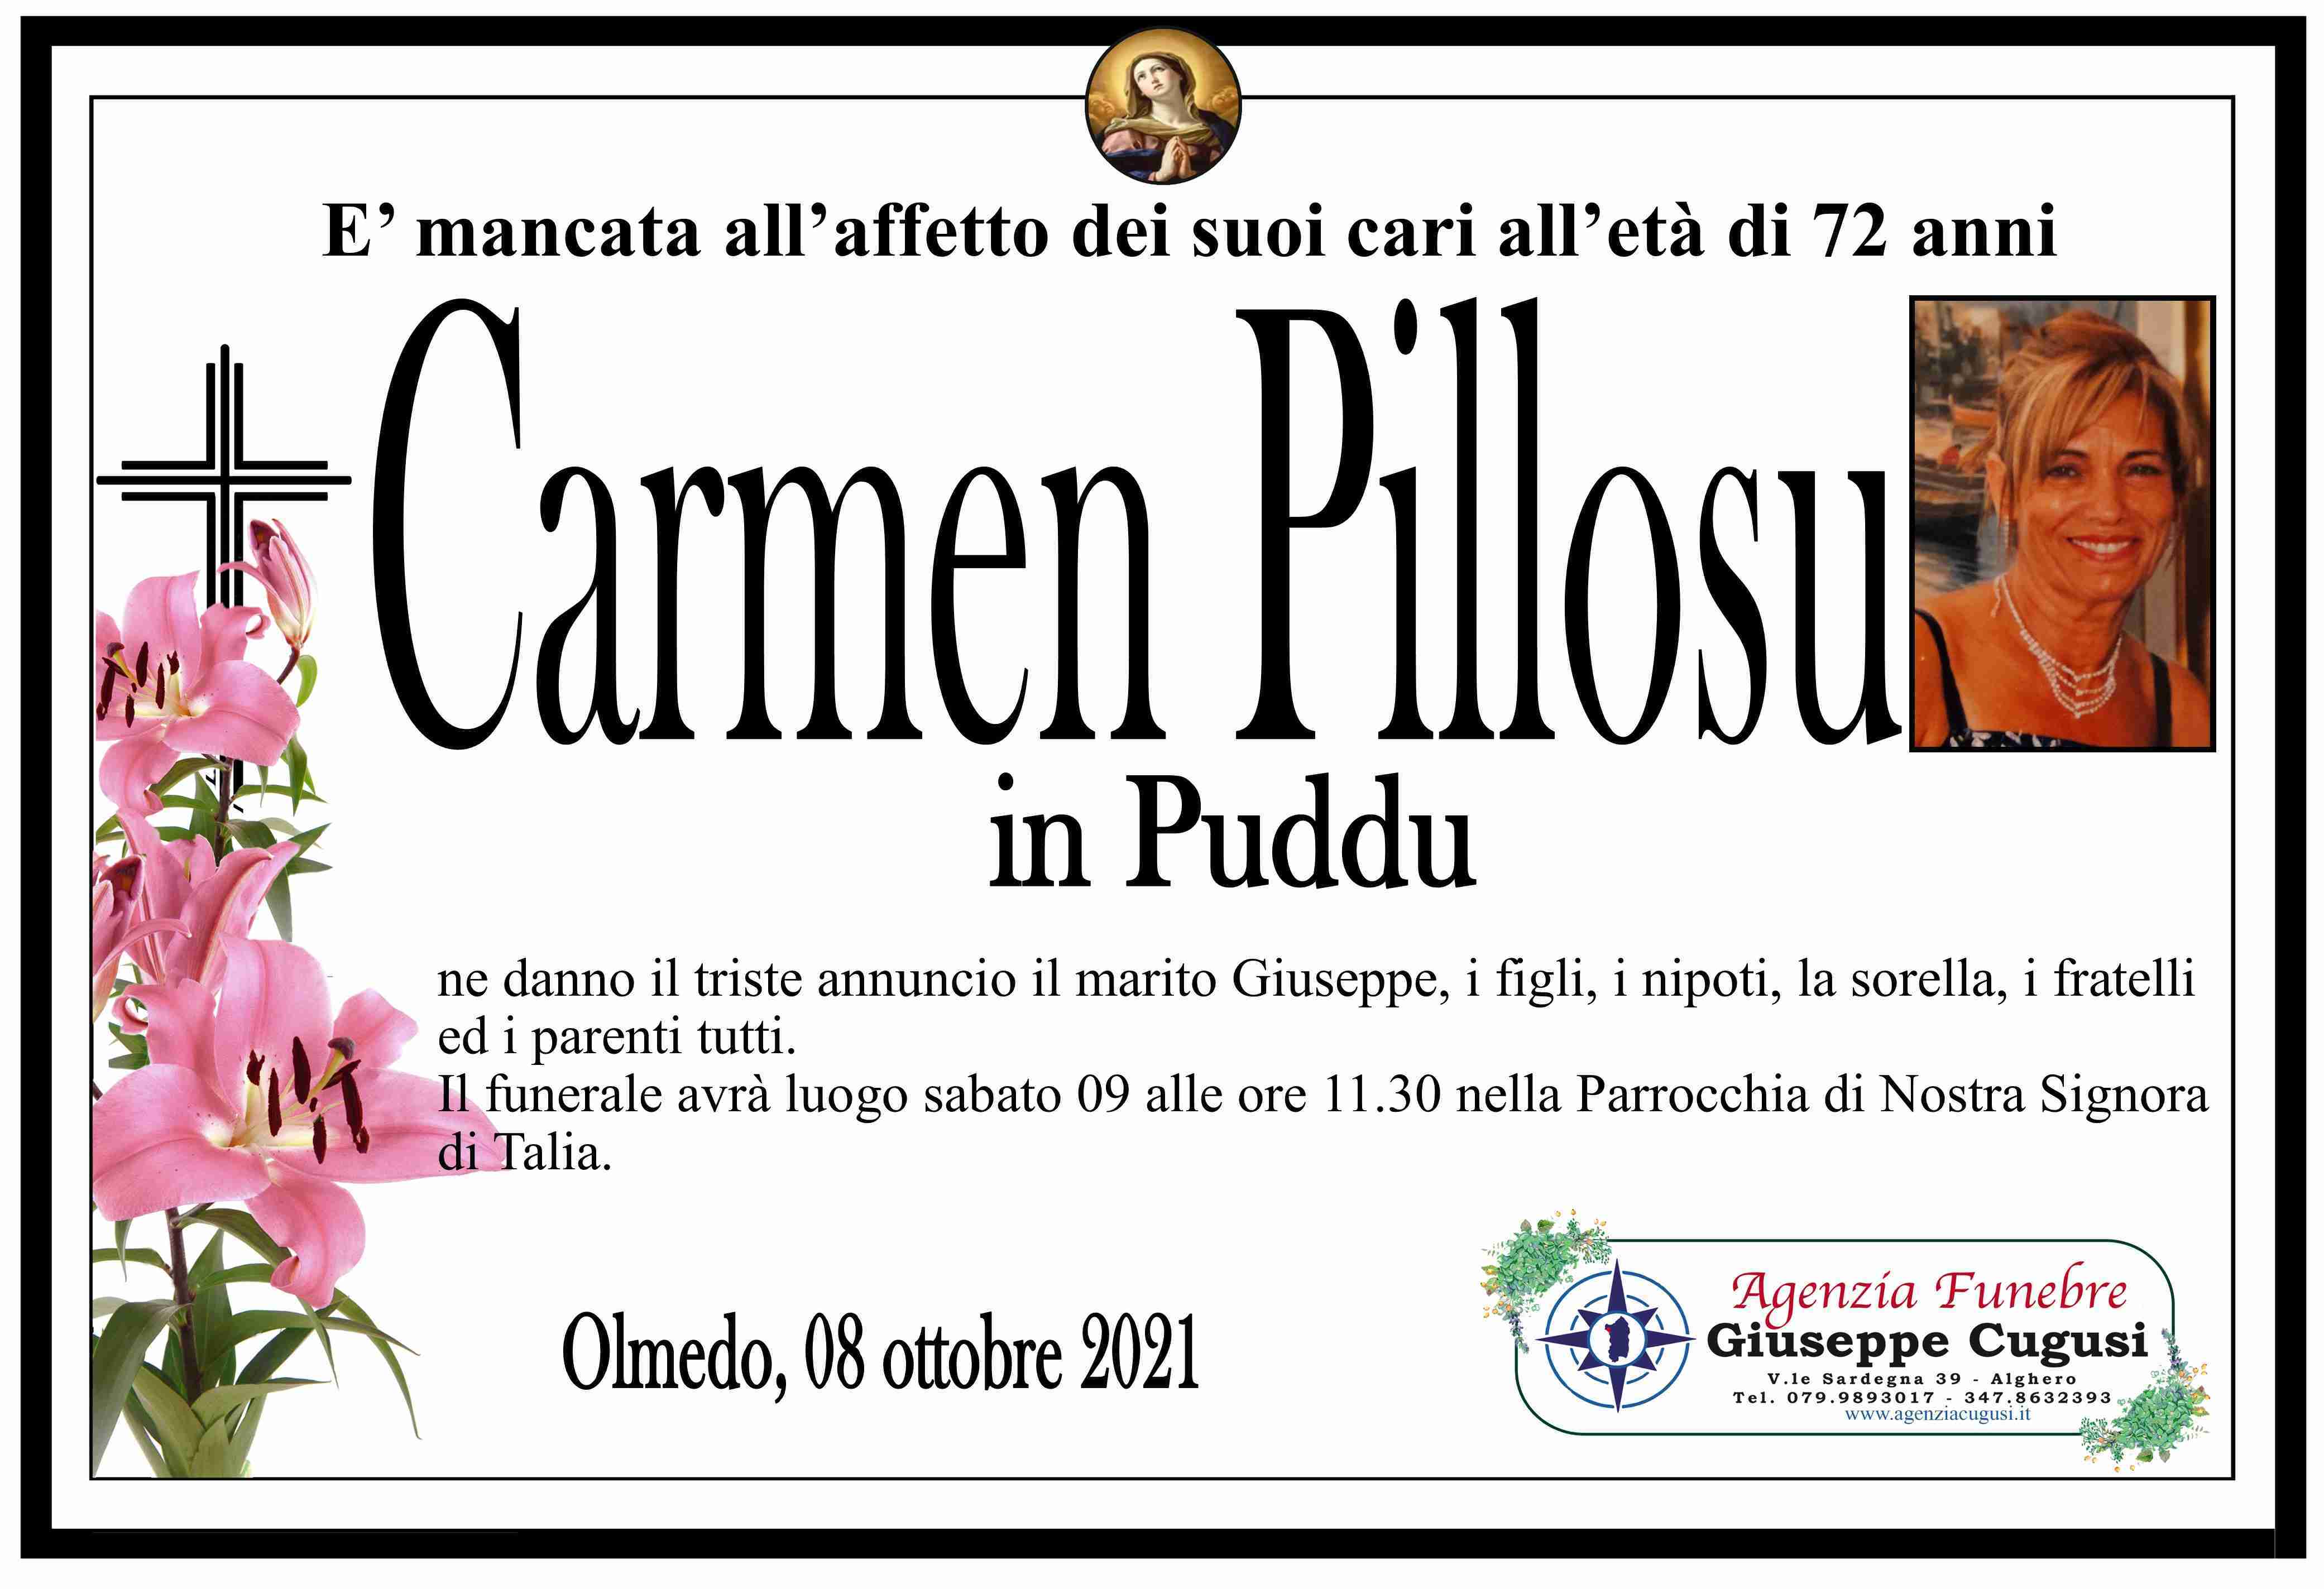 Carmen Pillosu